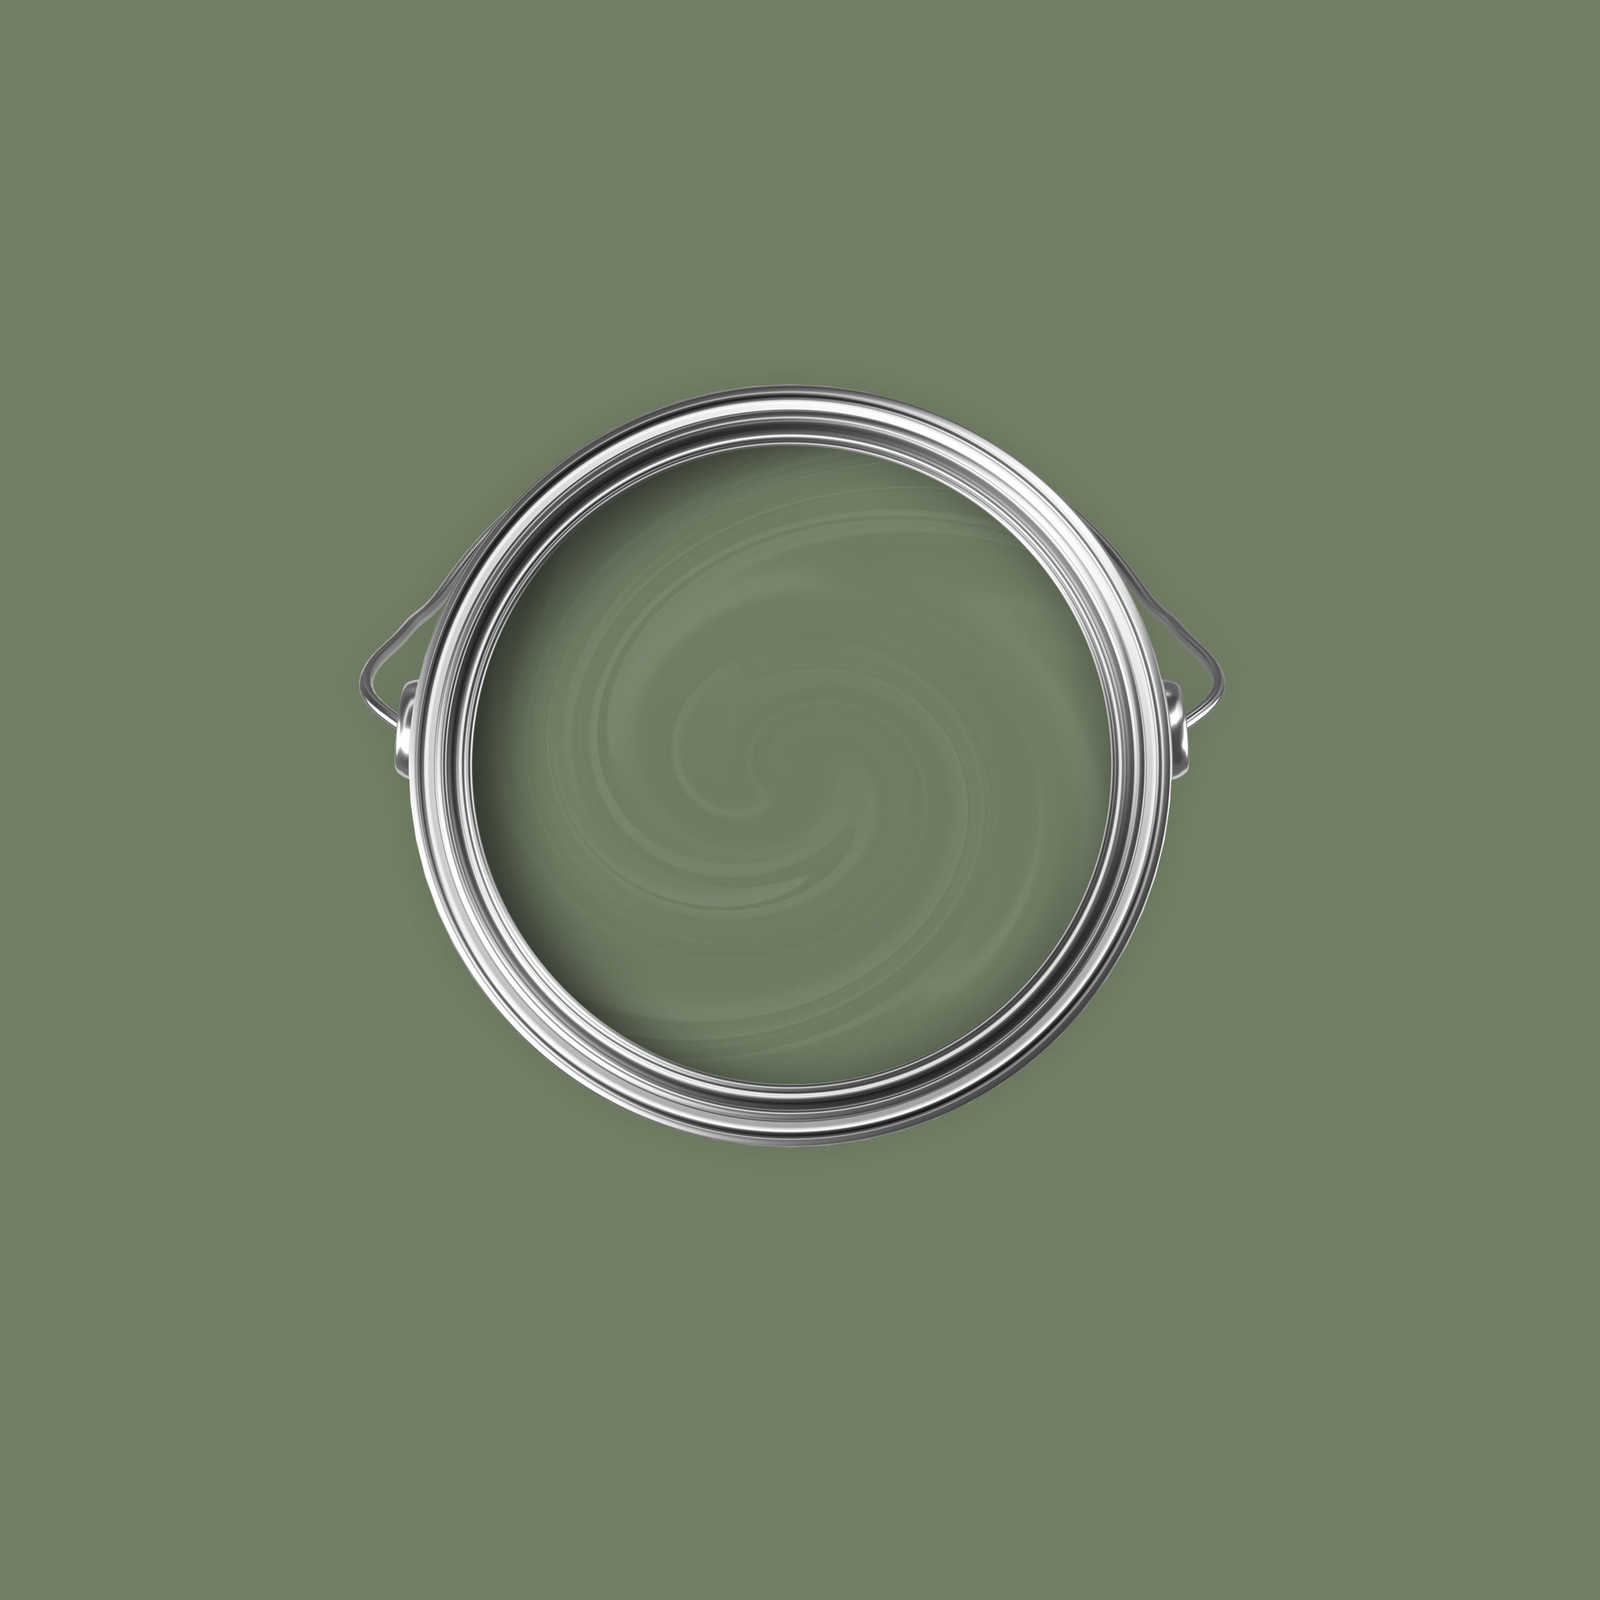             Peinture murale Premium vert olive relaxant »Gorgeous Green« NW504 – 2,5 litres
        